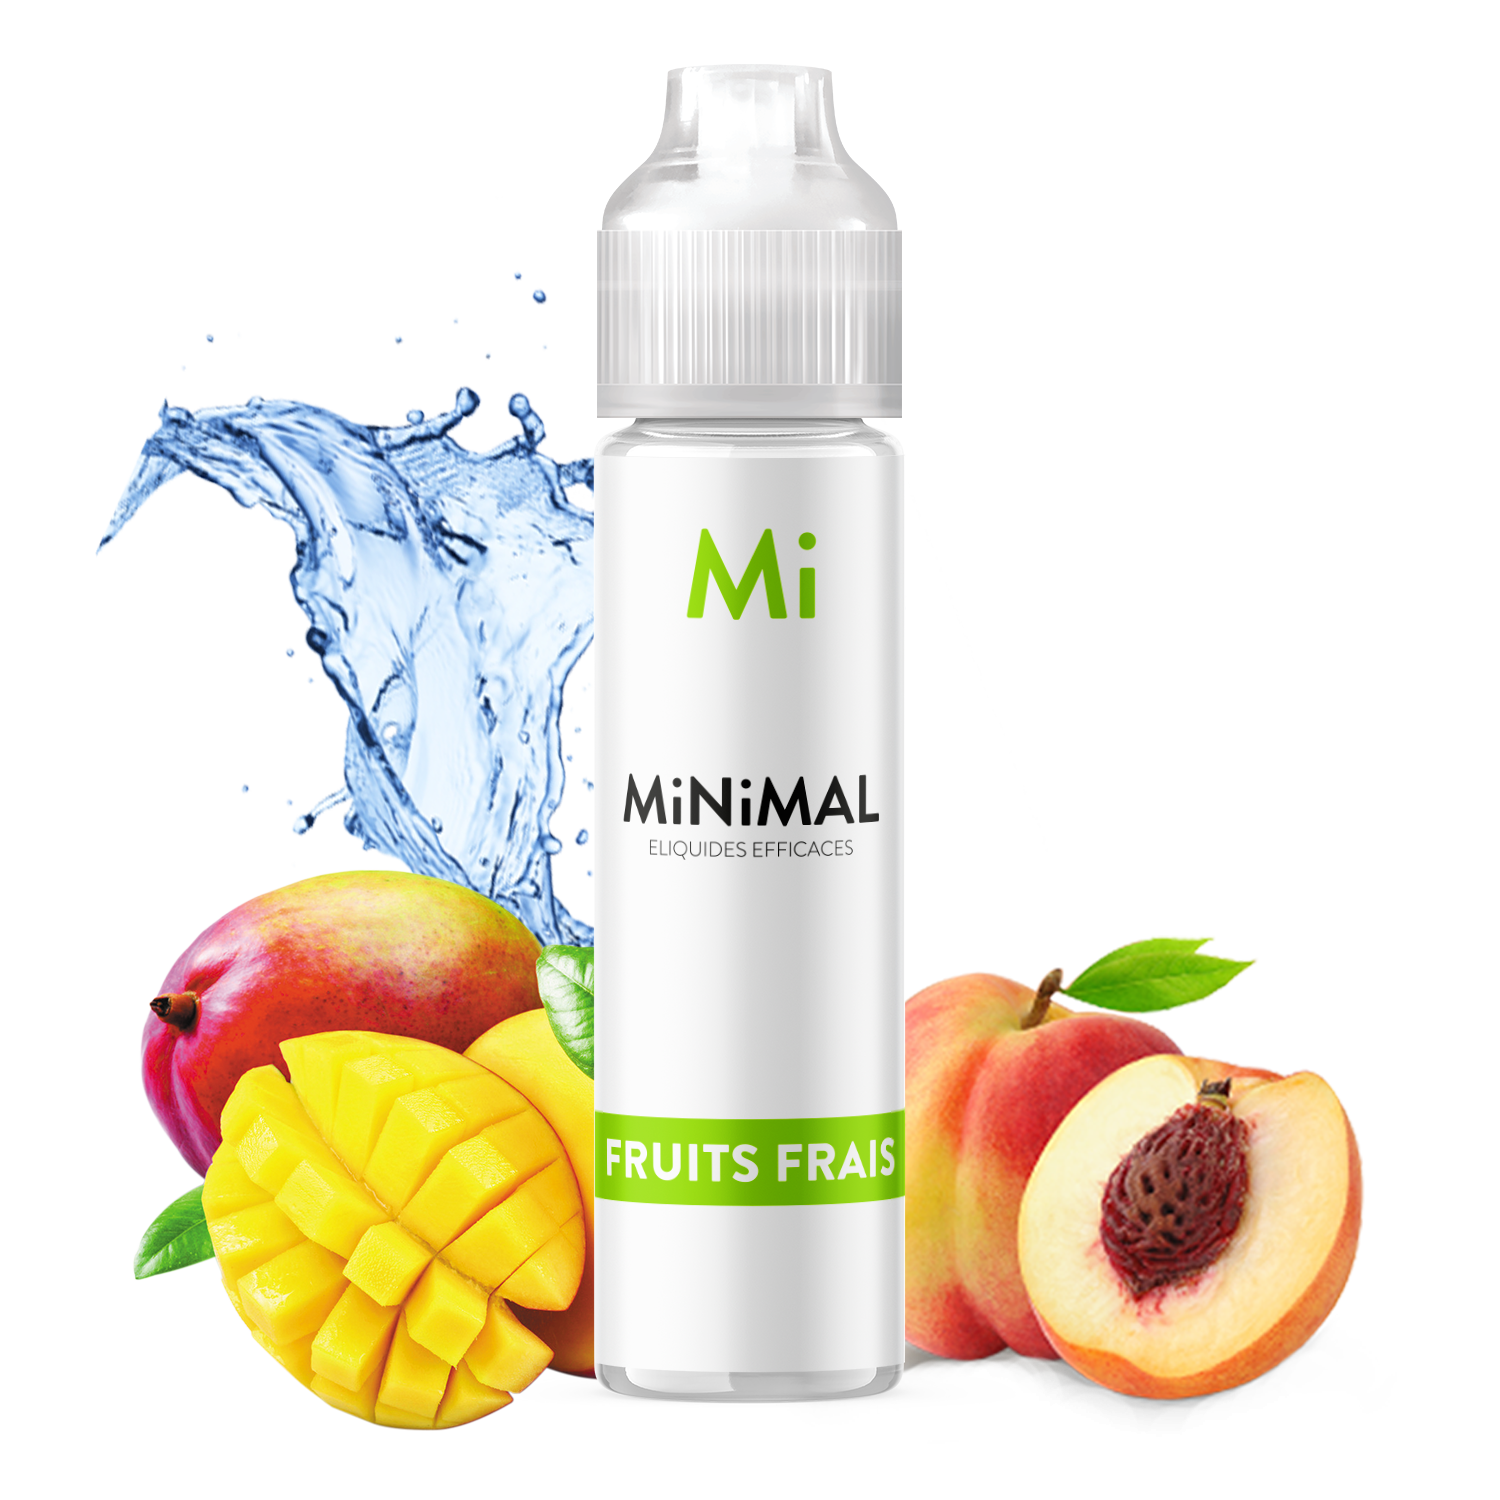 MiNiMAL - Fruits Frais Grand Format